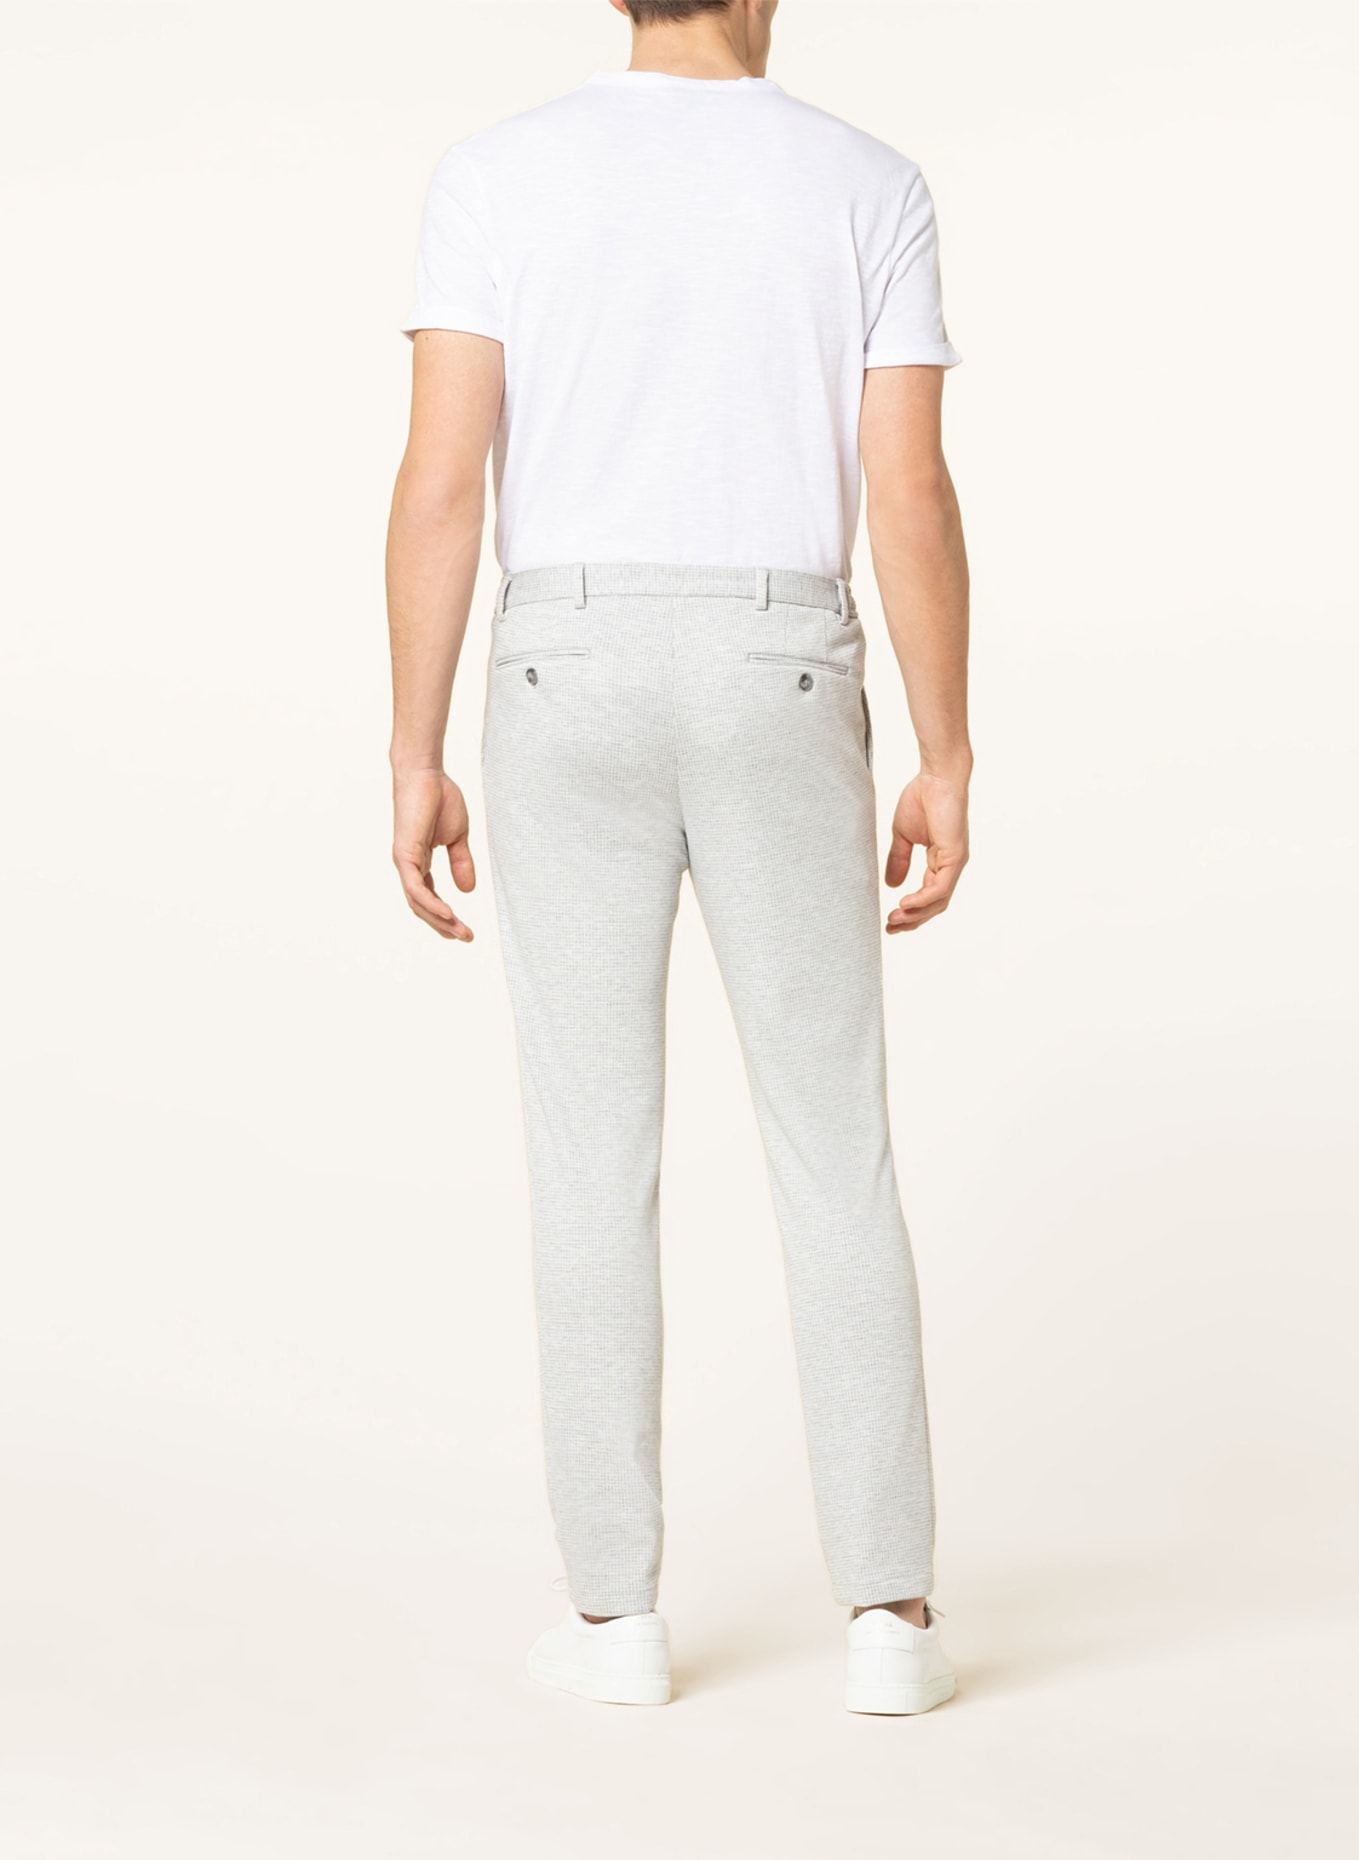 PAUL Anzughose Slim Fit, Farbe: 310 Kitt/Offwhite (Bild 3)